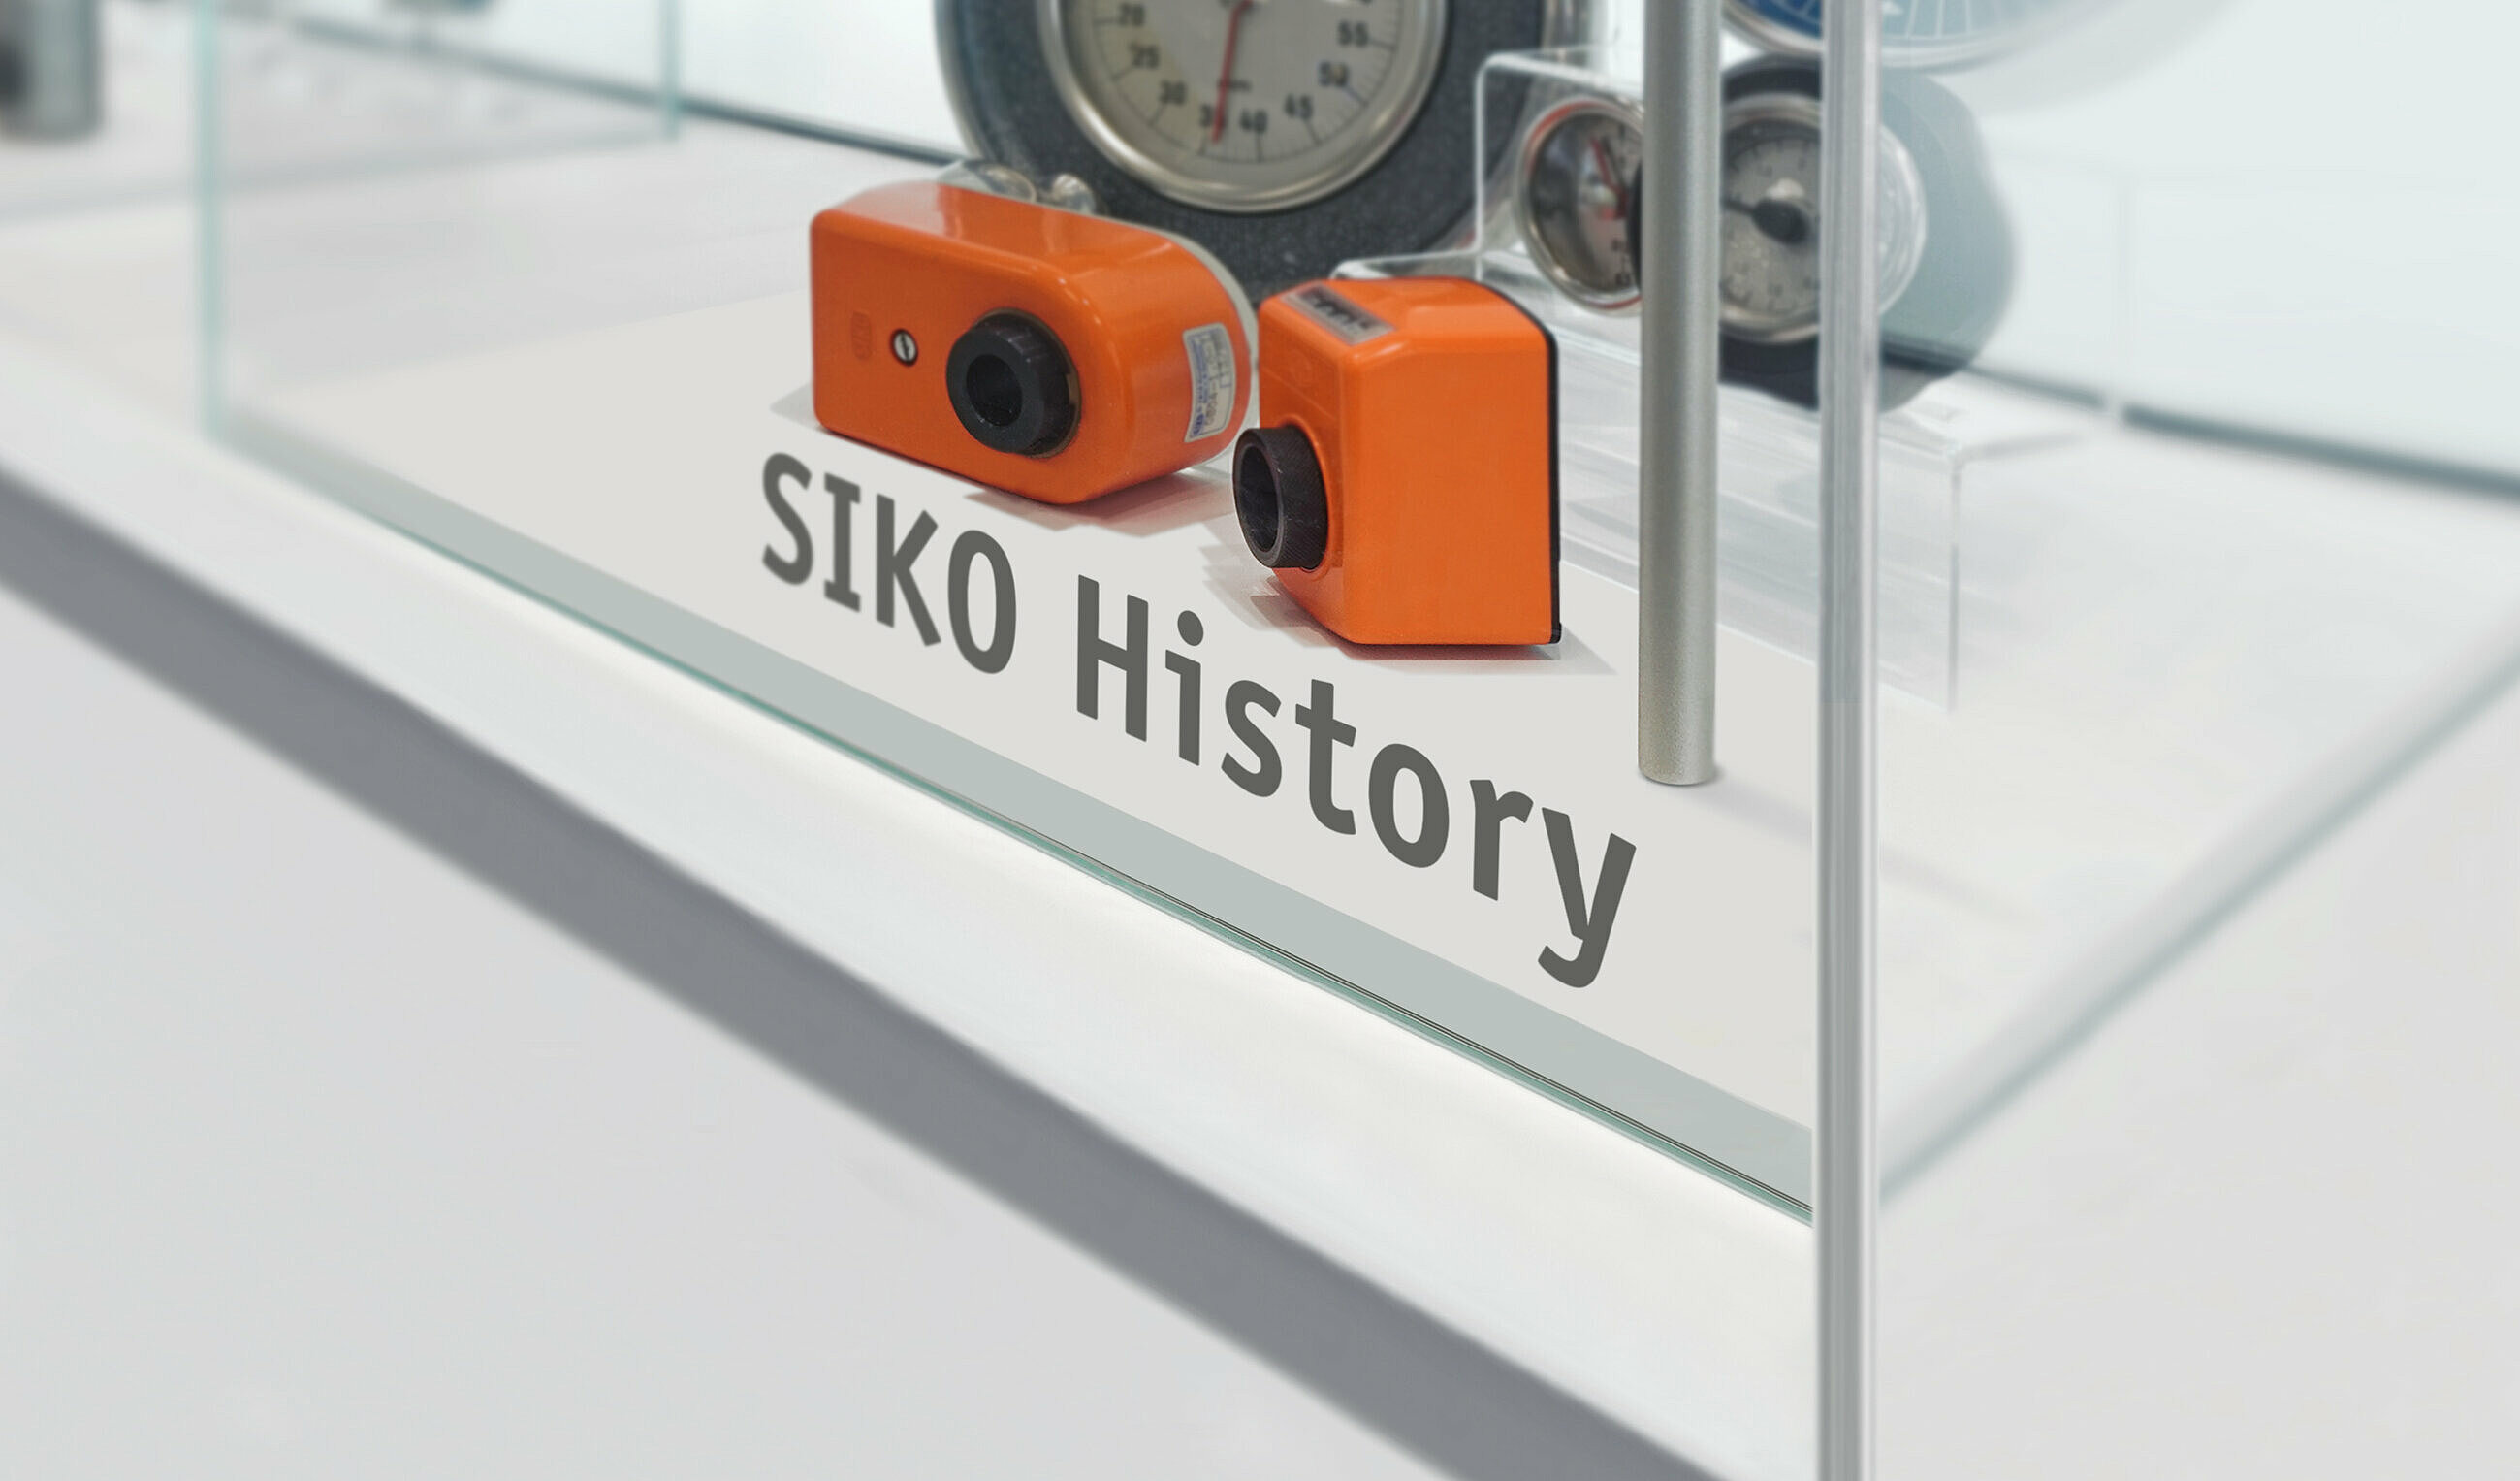 SIKO公司的历史产品展示在玻璃展示柜中